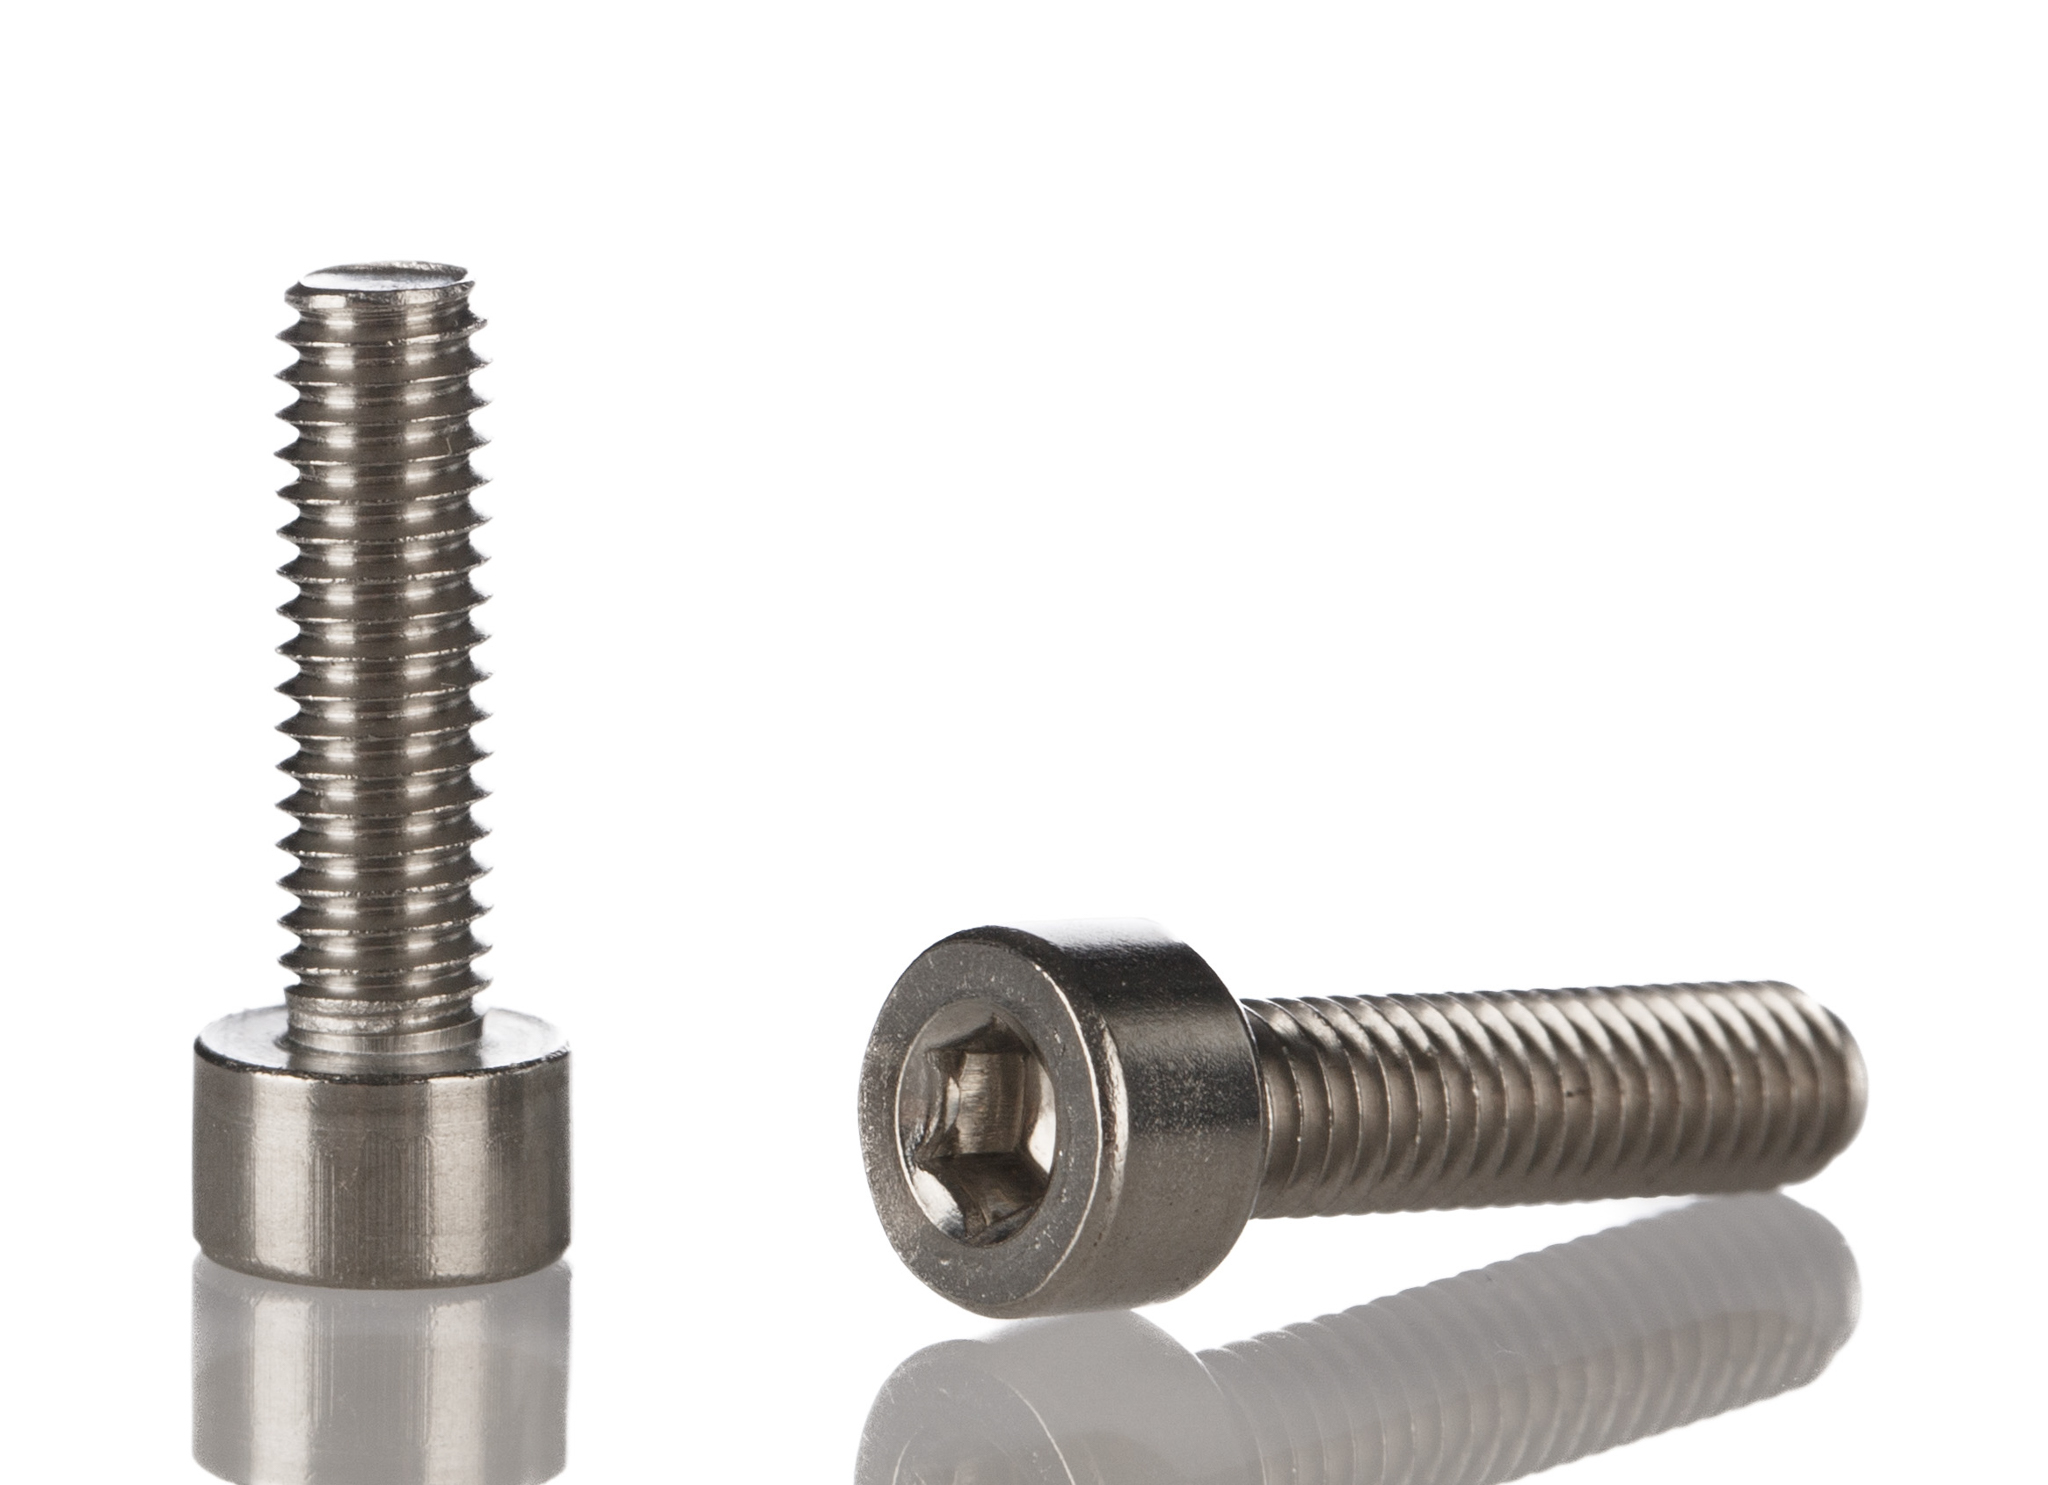 Socket screws explained